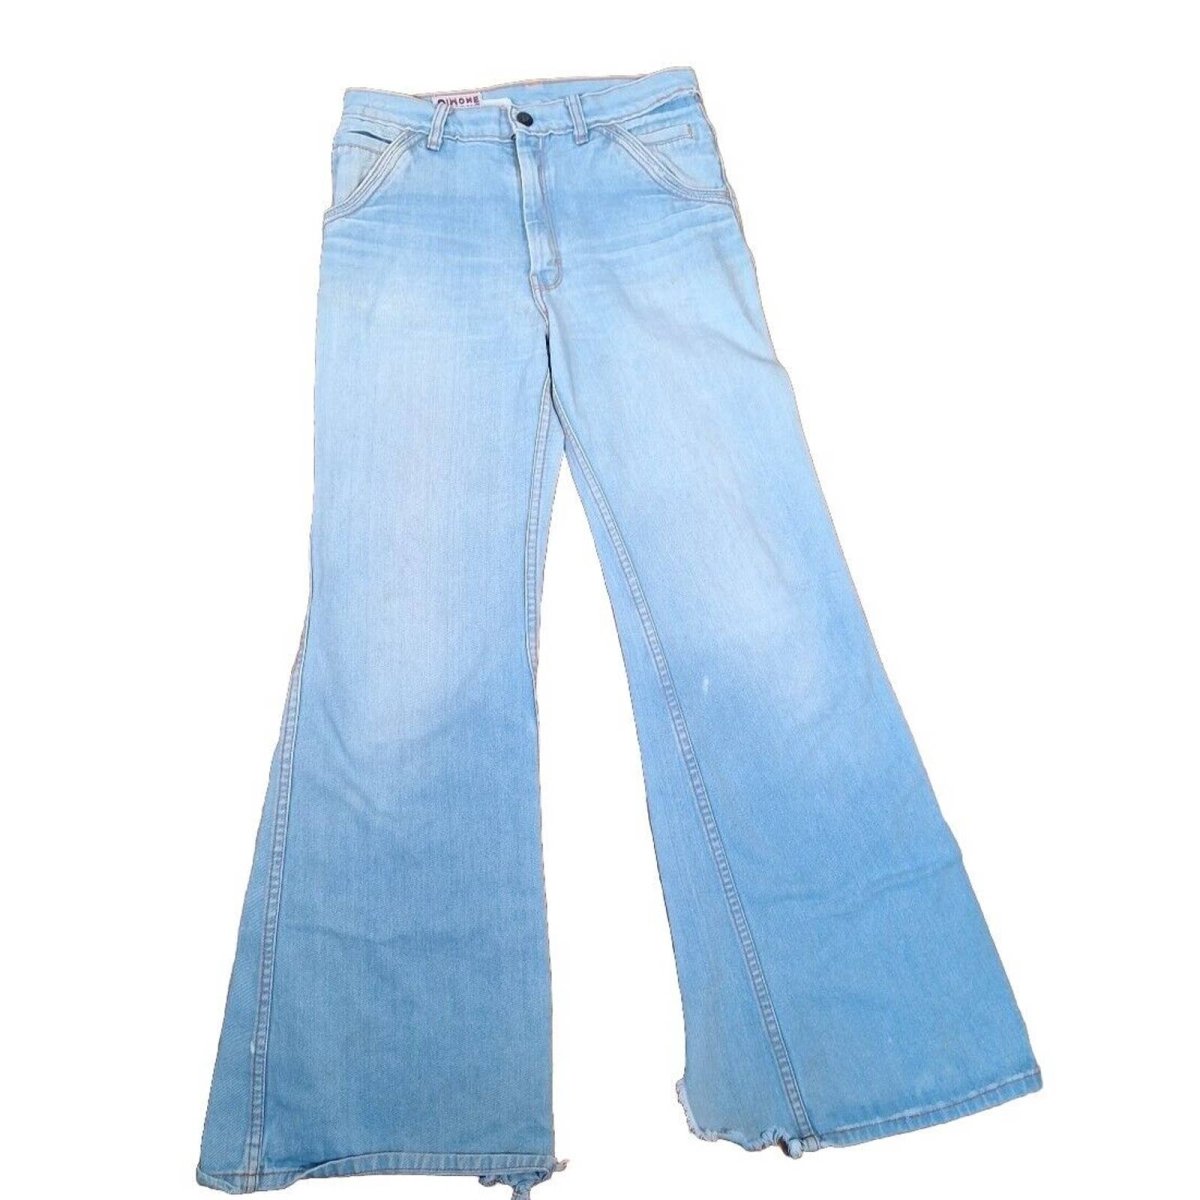 Vintage 70s Destroyed Light Wash Denim Bell Bottom Jeans 29x31 Slim - themallvintage The Mall Vintage